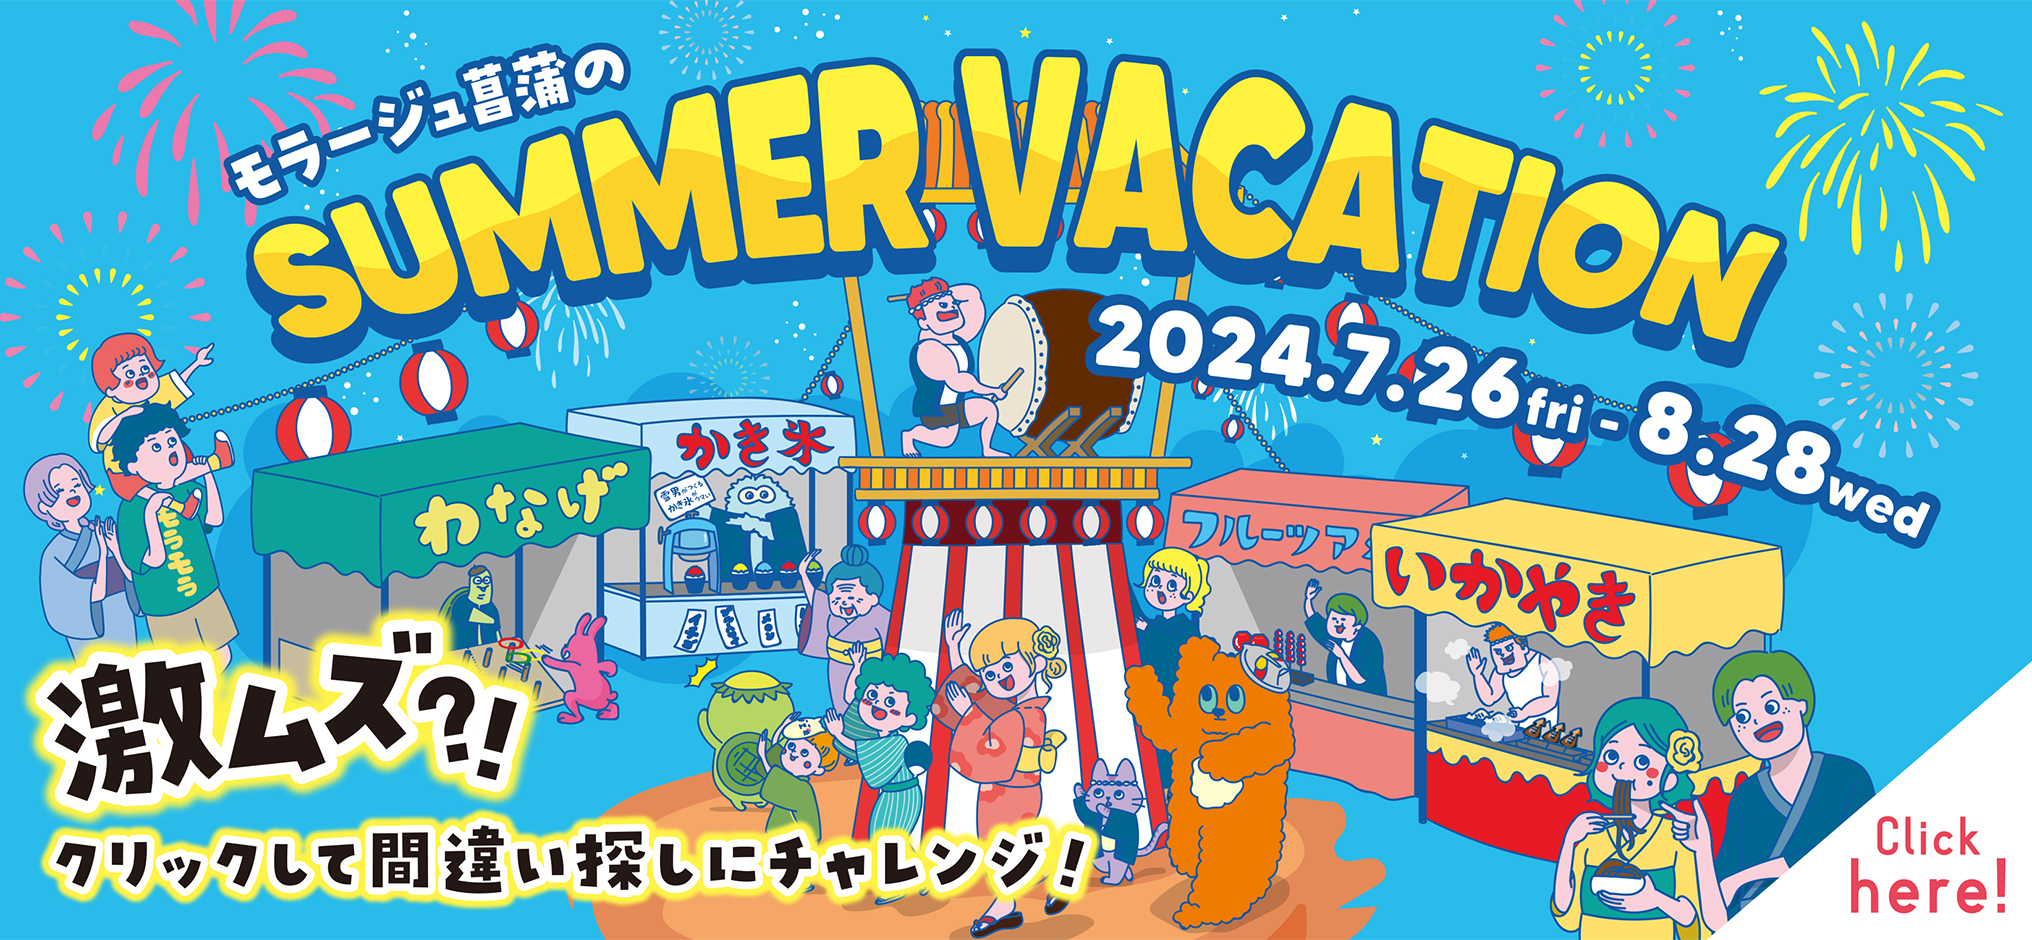 202407_summer_HP-banner.jpg